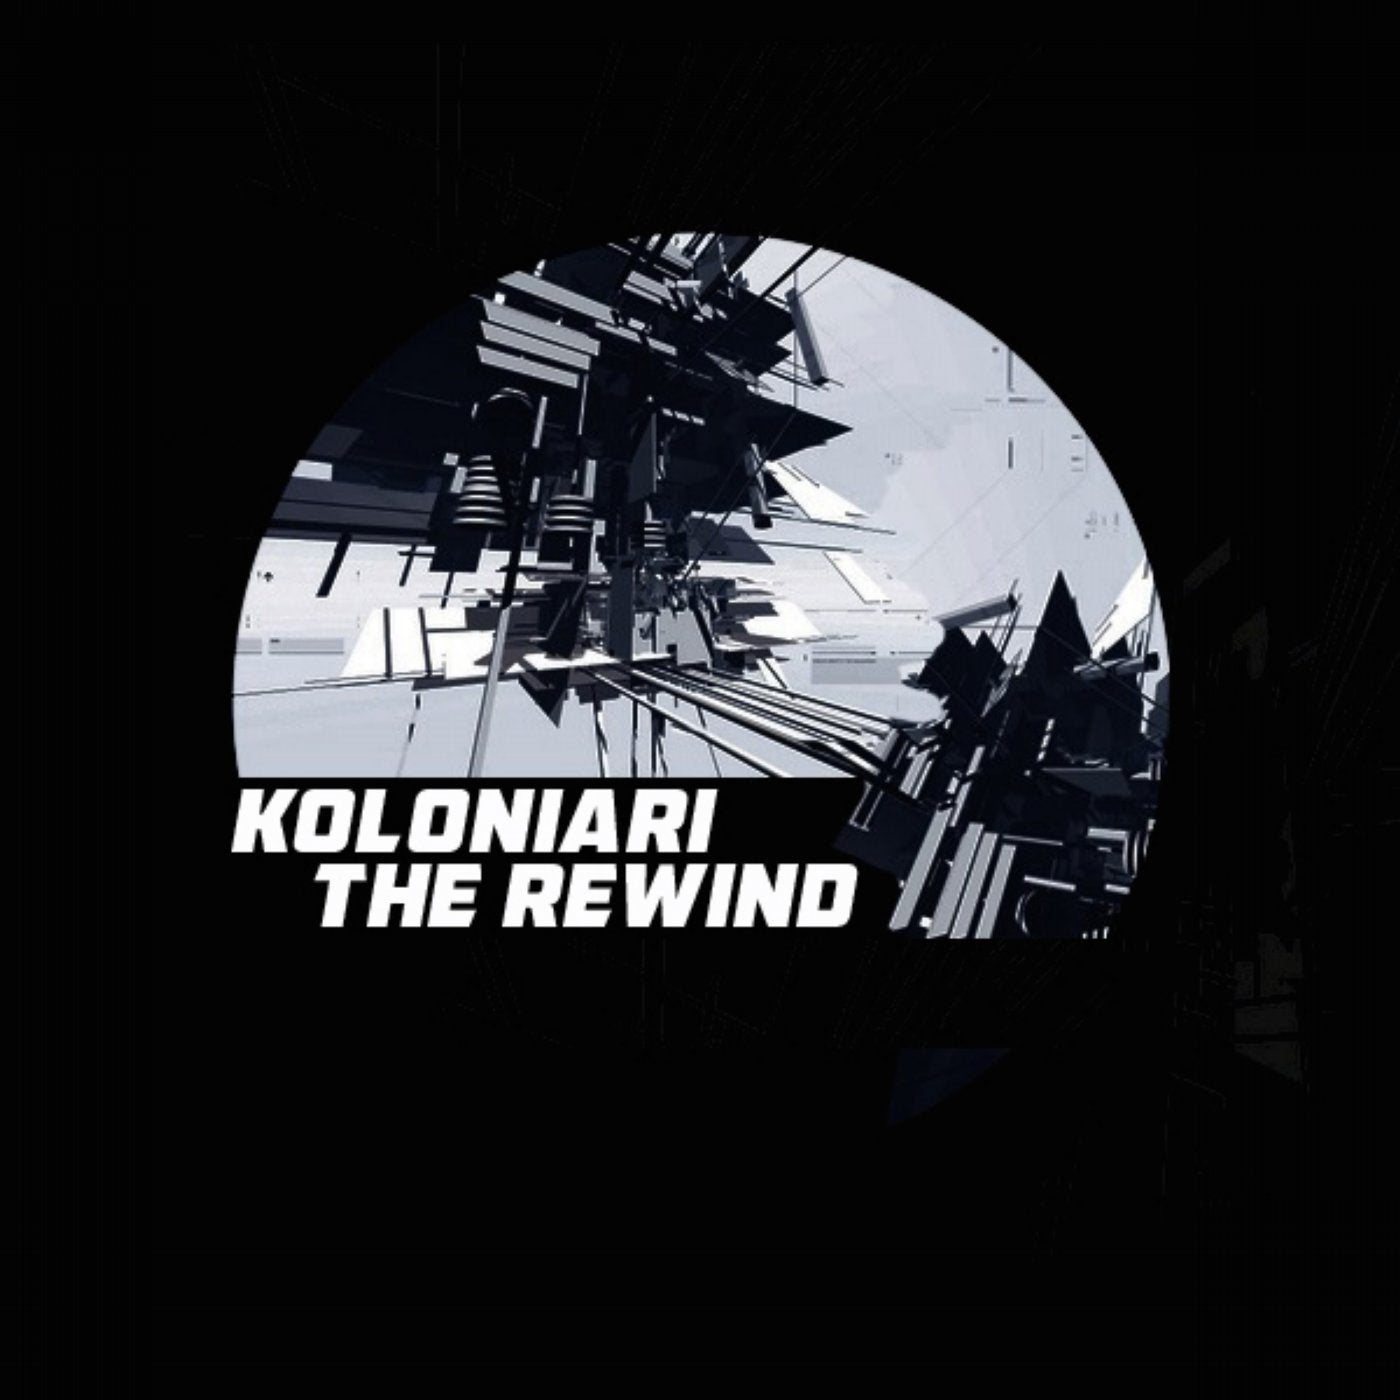 The Rewind